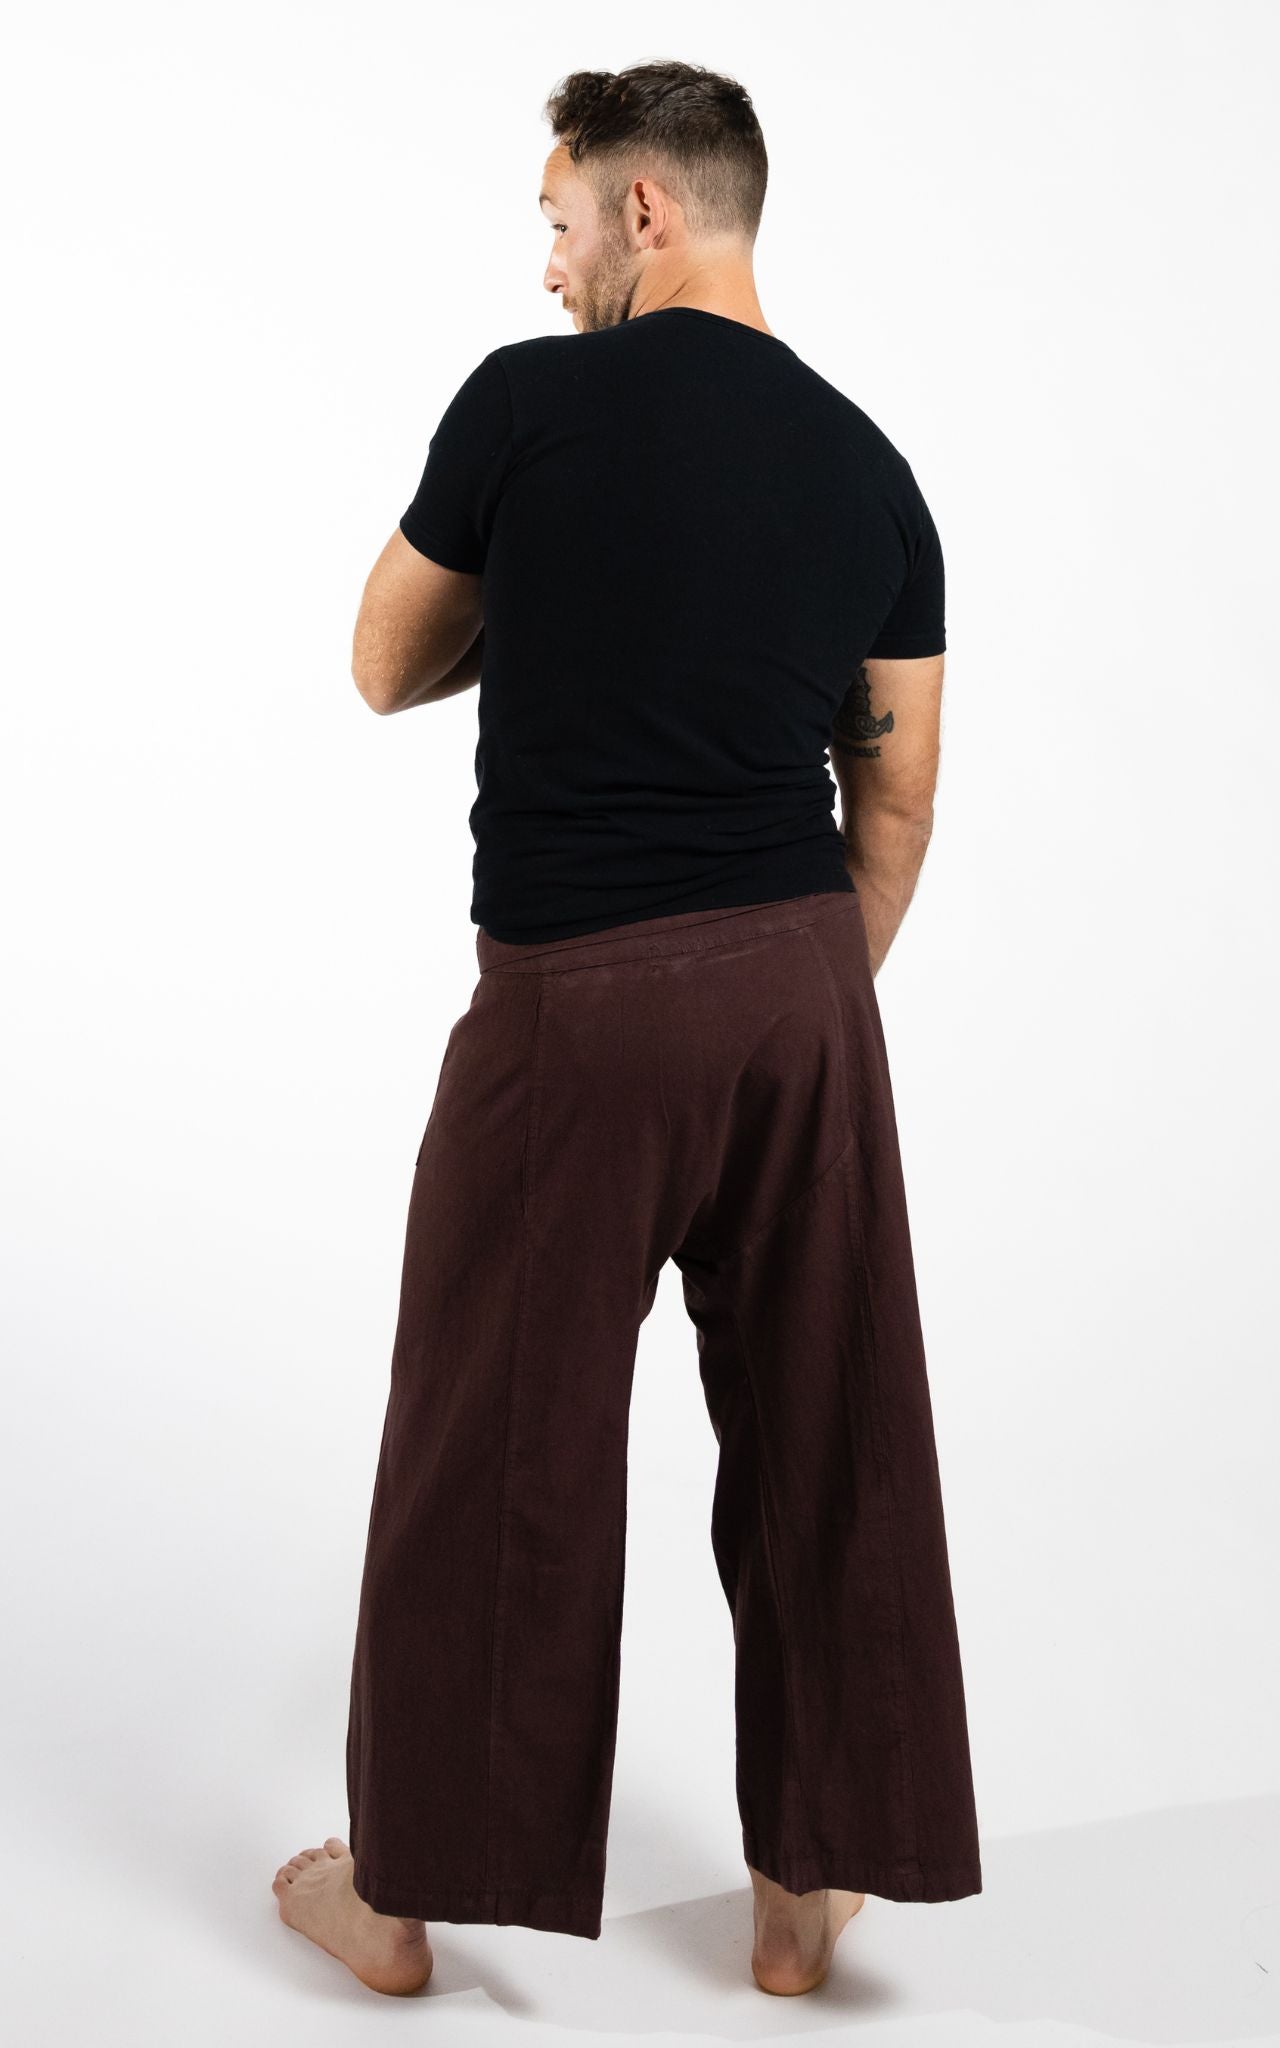 Folkwear 161 Thai Fisherman's Pants - The Fold Line